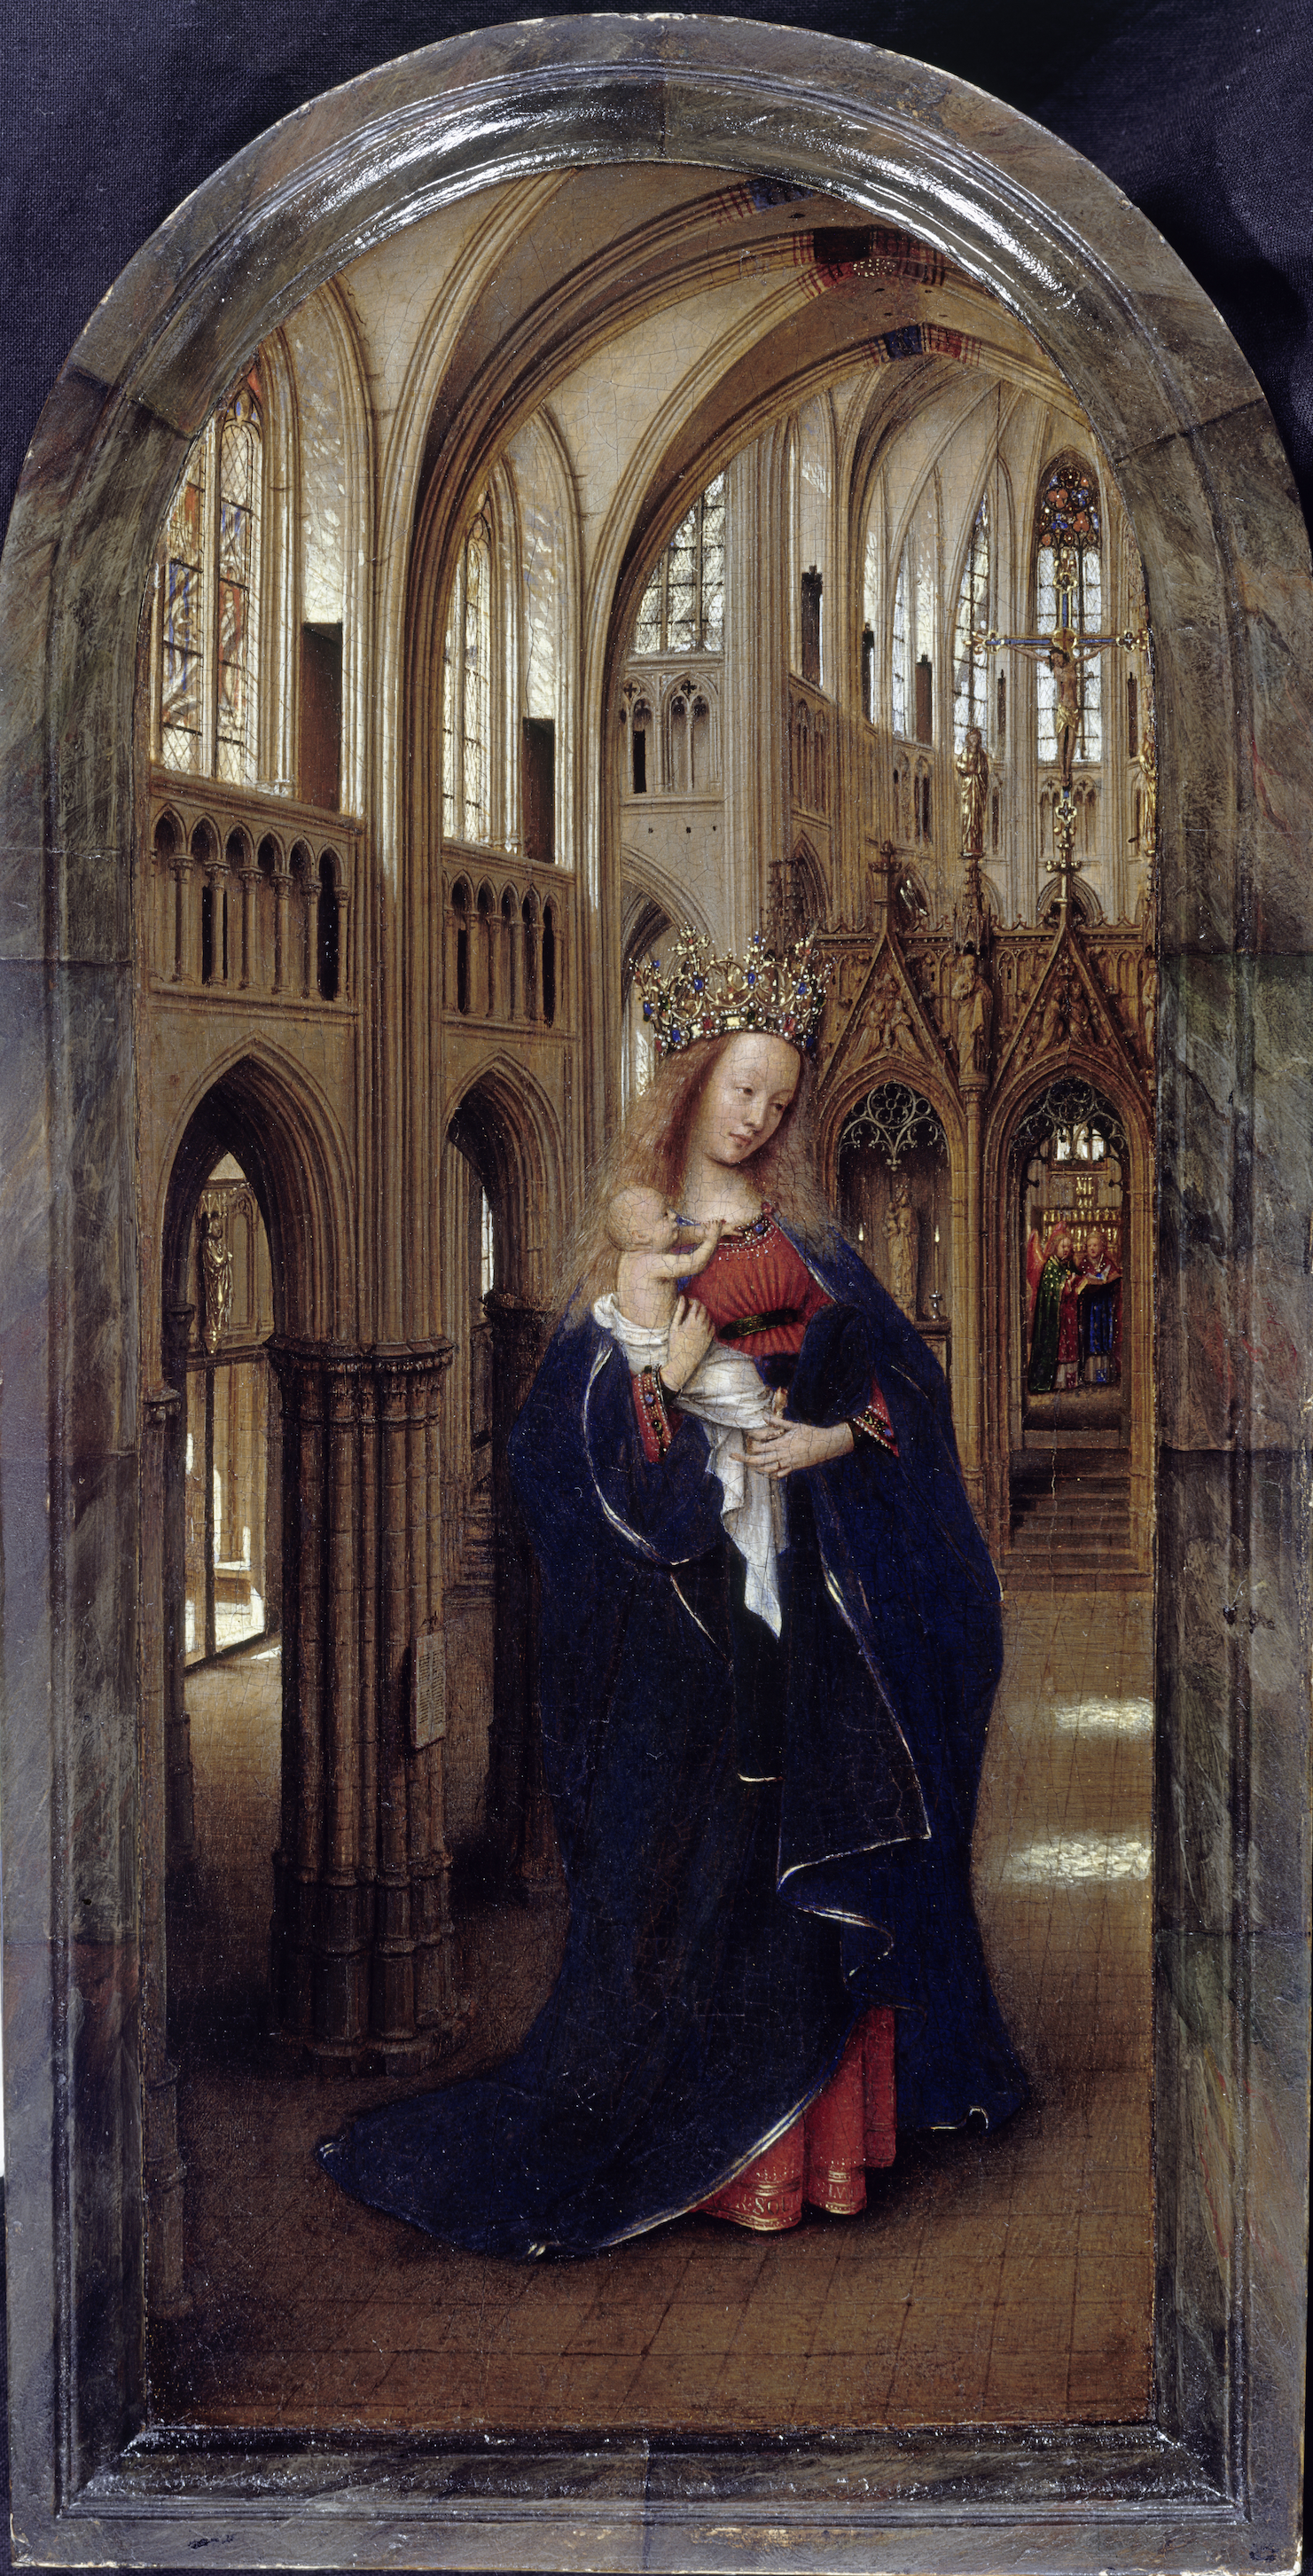 Madonna in de Kerk by Jan van Eyck - c. 1425 - 31,1 x 13,9 cm Gemäldegalerie